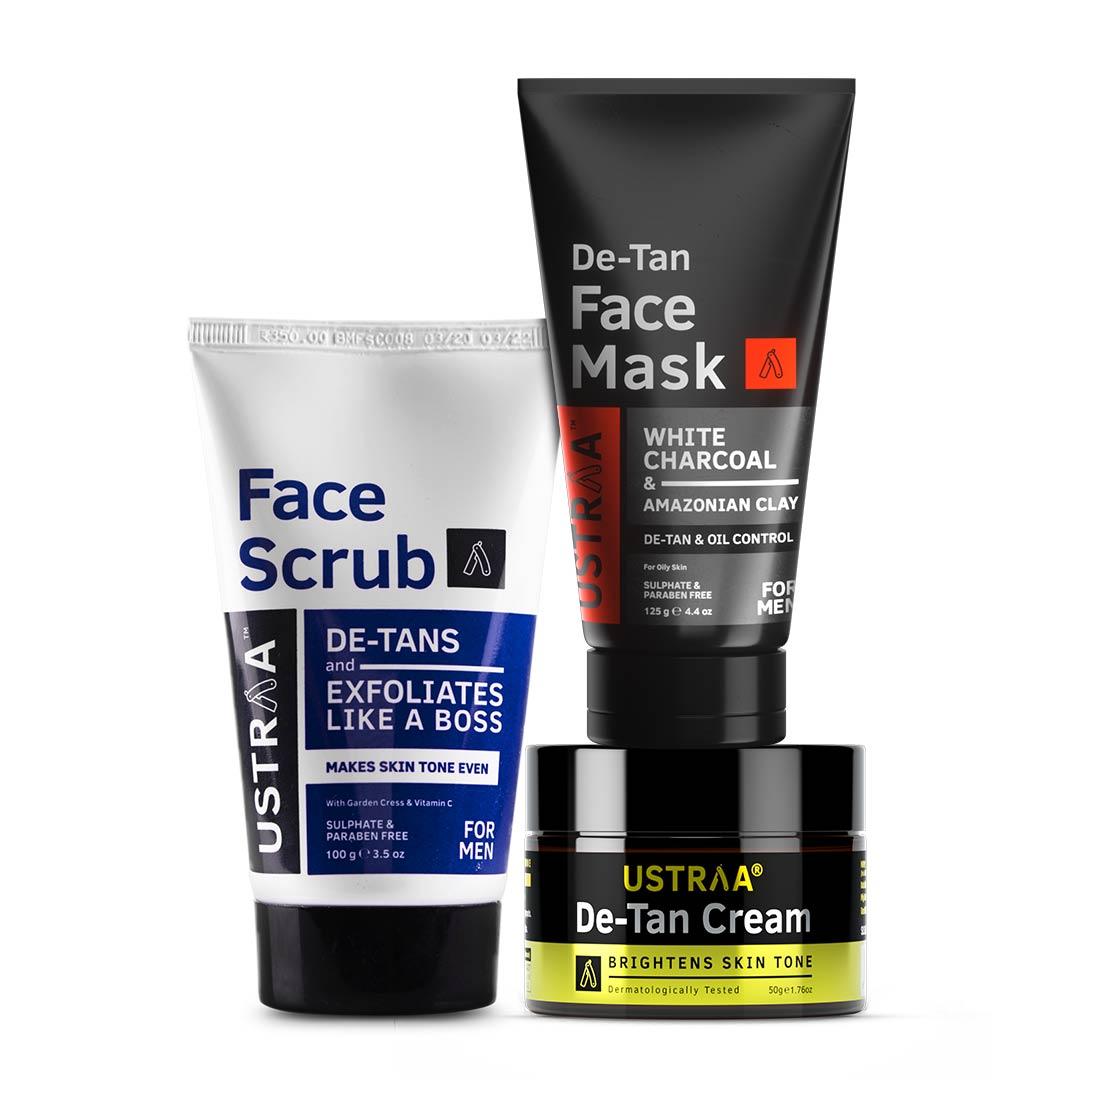 Ustraa Complete De-Tan Kit for Men (Pack of 3): Face Scrub, Face Mask, and De-tan Cream